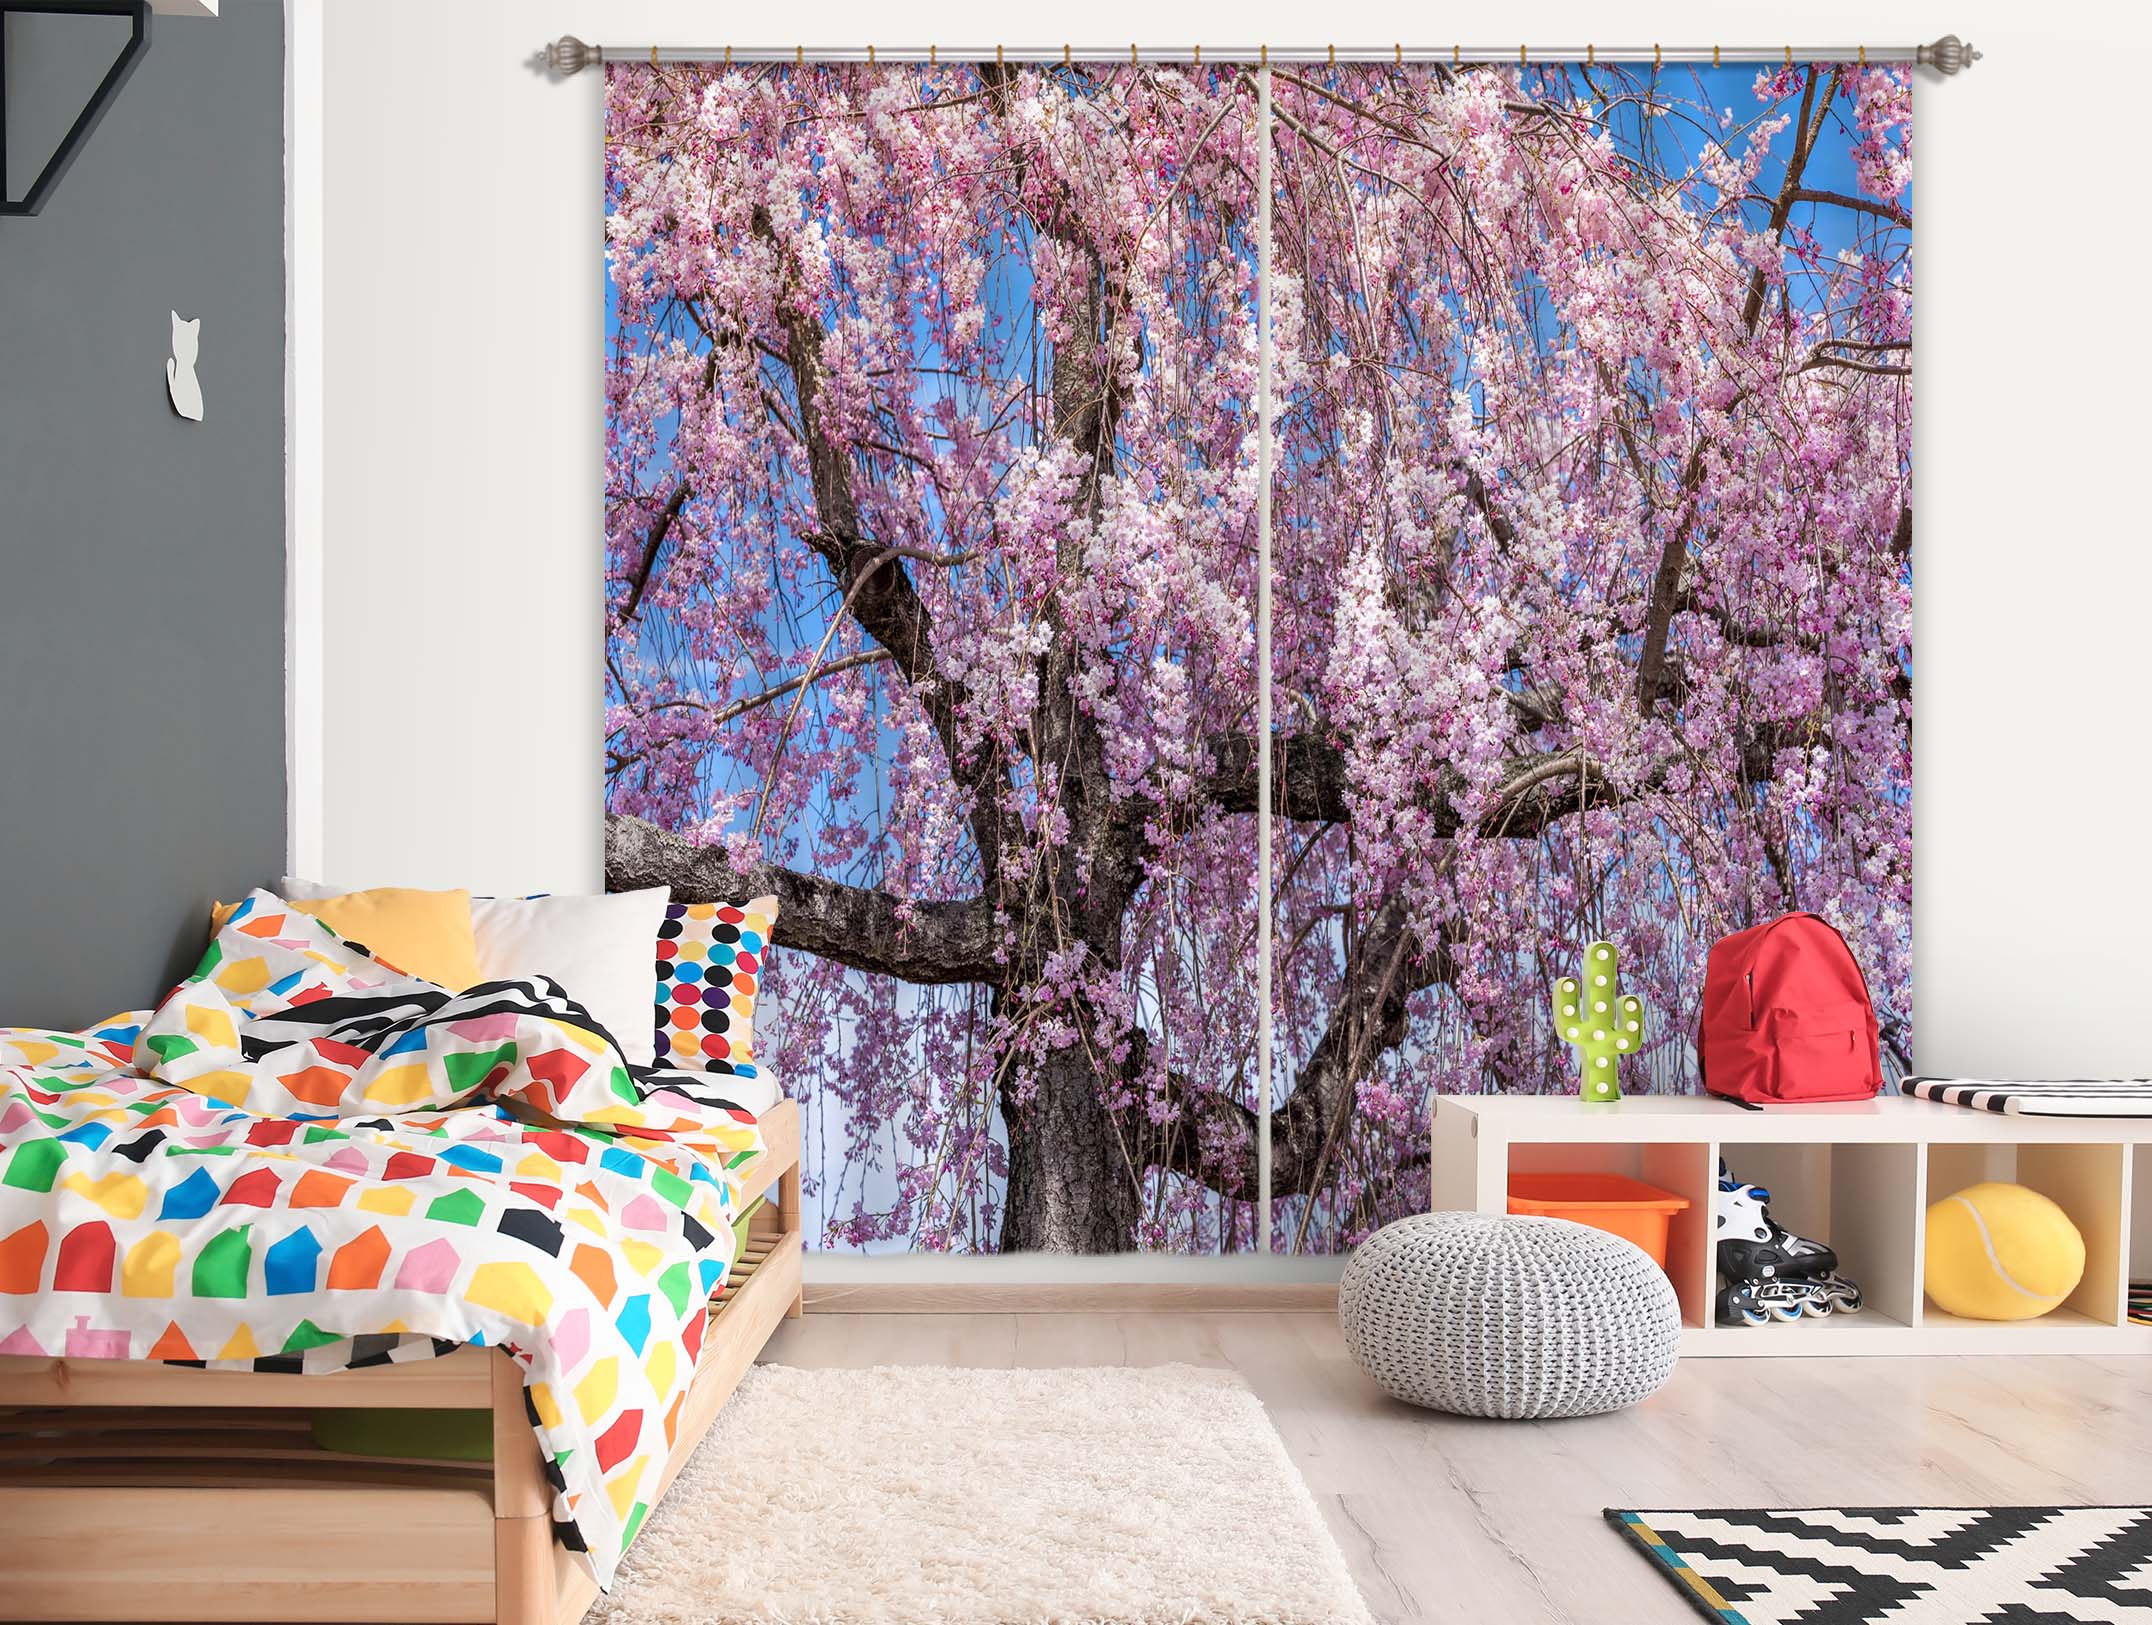 3D Peach Tree 059 Marco Carmassi Curtain Curtains Drapes